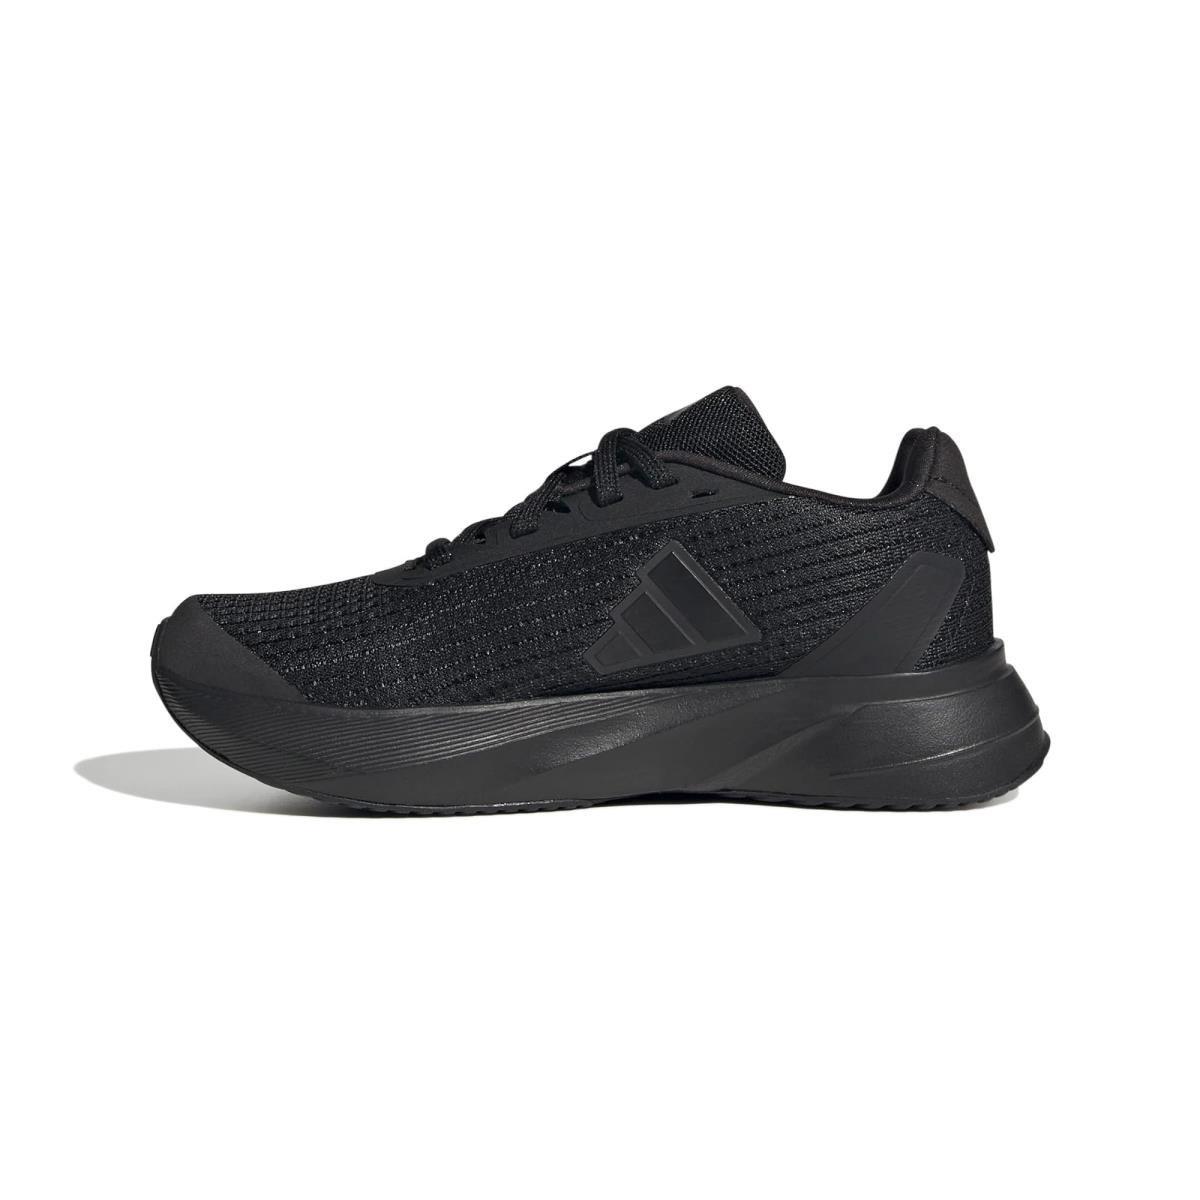 Adidas Unisex-child Duramo Sl Sneaker Black/Black/White